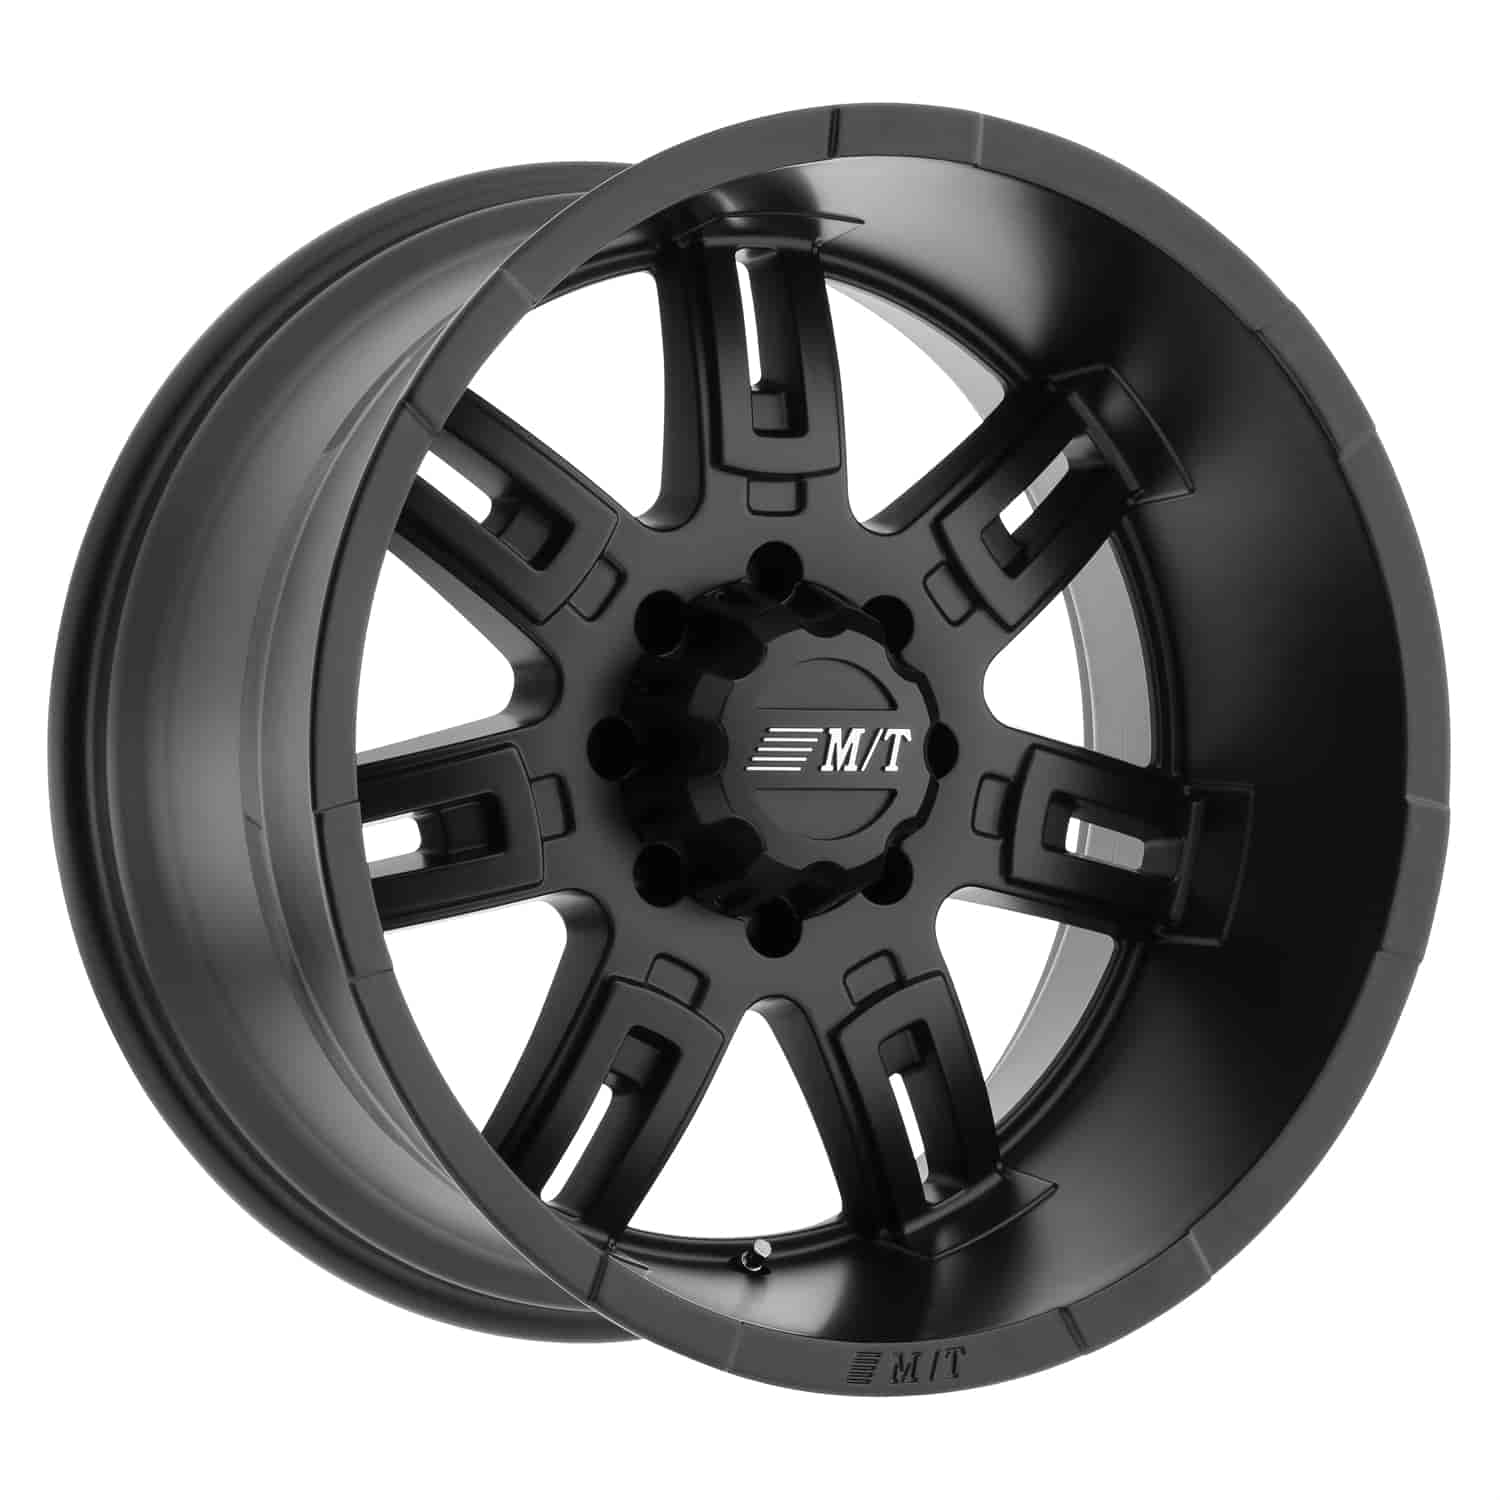 SideBiter II Wheel Size: 22" x 12" Bolt Pattern: 8 x 180mm Rear Spacing: 5-1/4" Offset: -32mm Max. Load: 3640 lbs